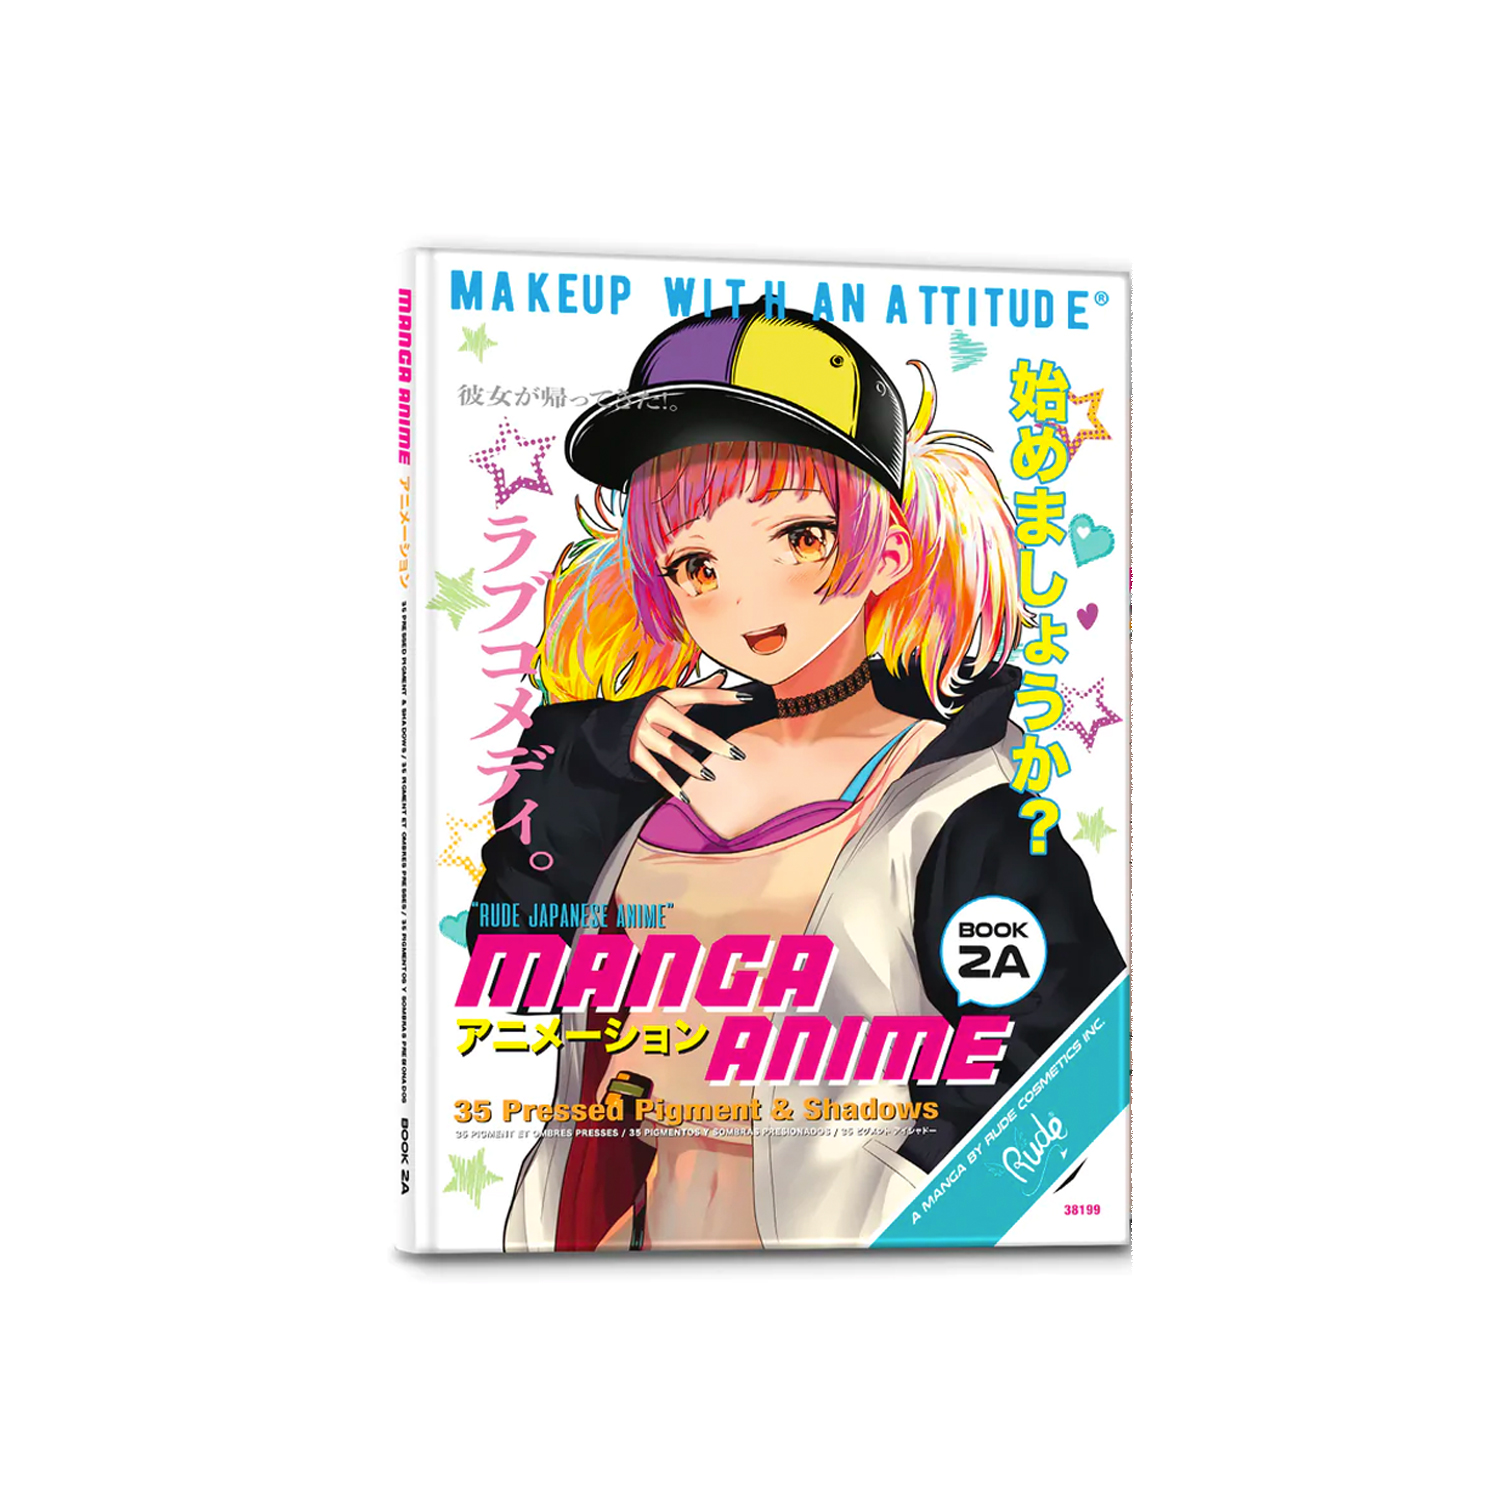 Paleta de Maquillaje “Manga Animé” Book 2A Rude Cosmetics – HB Importaciones